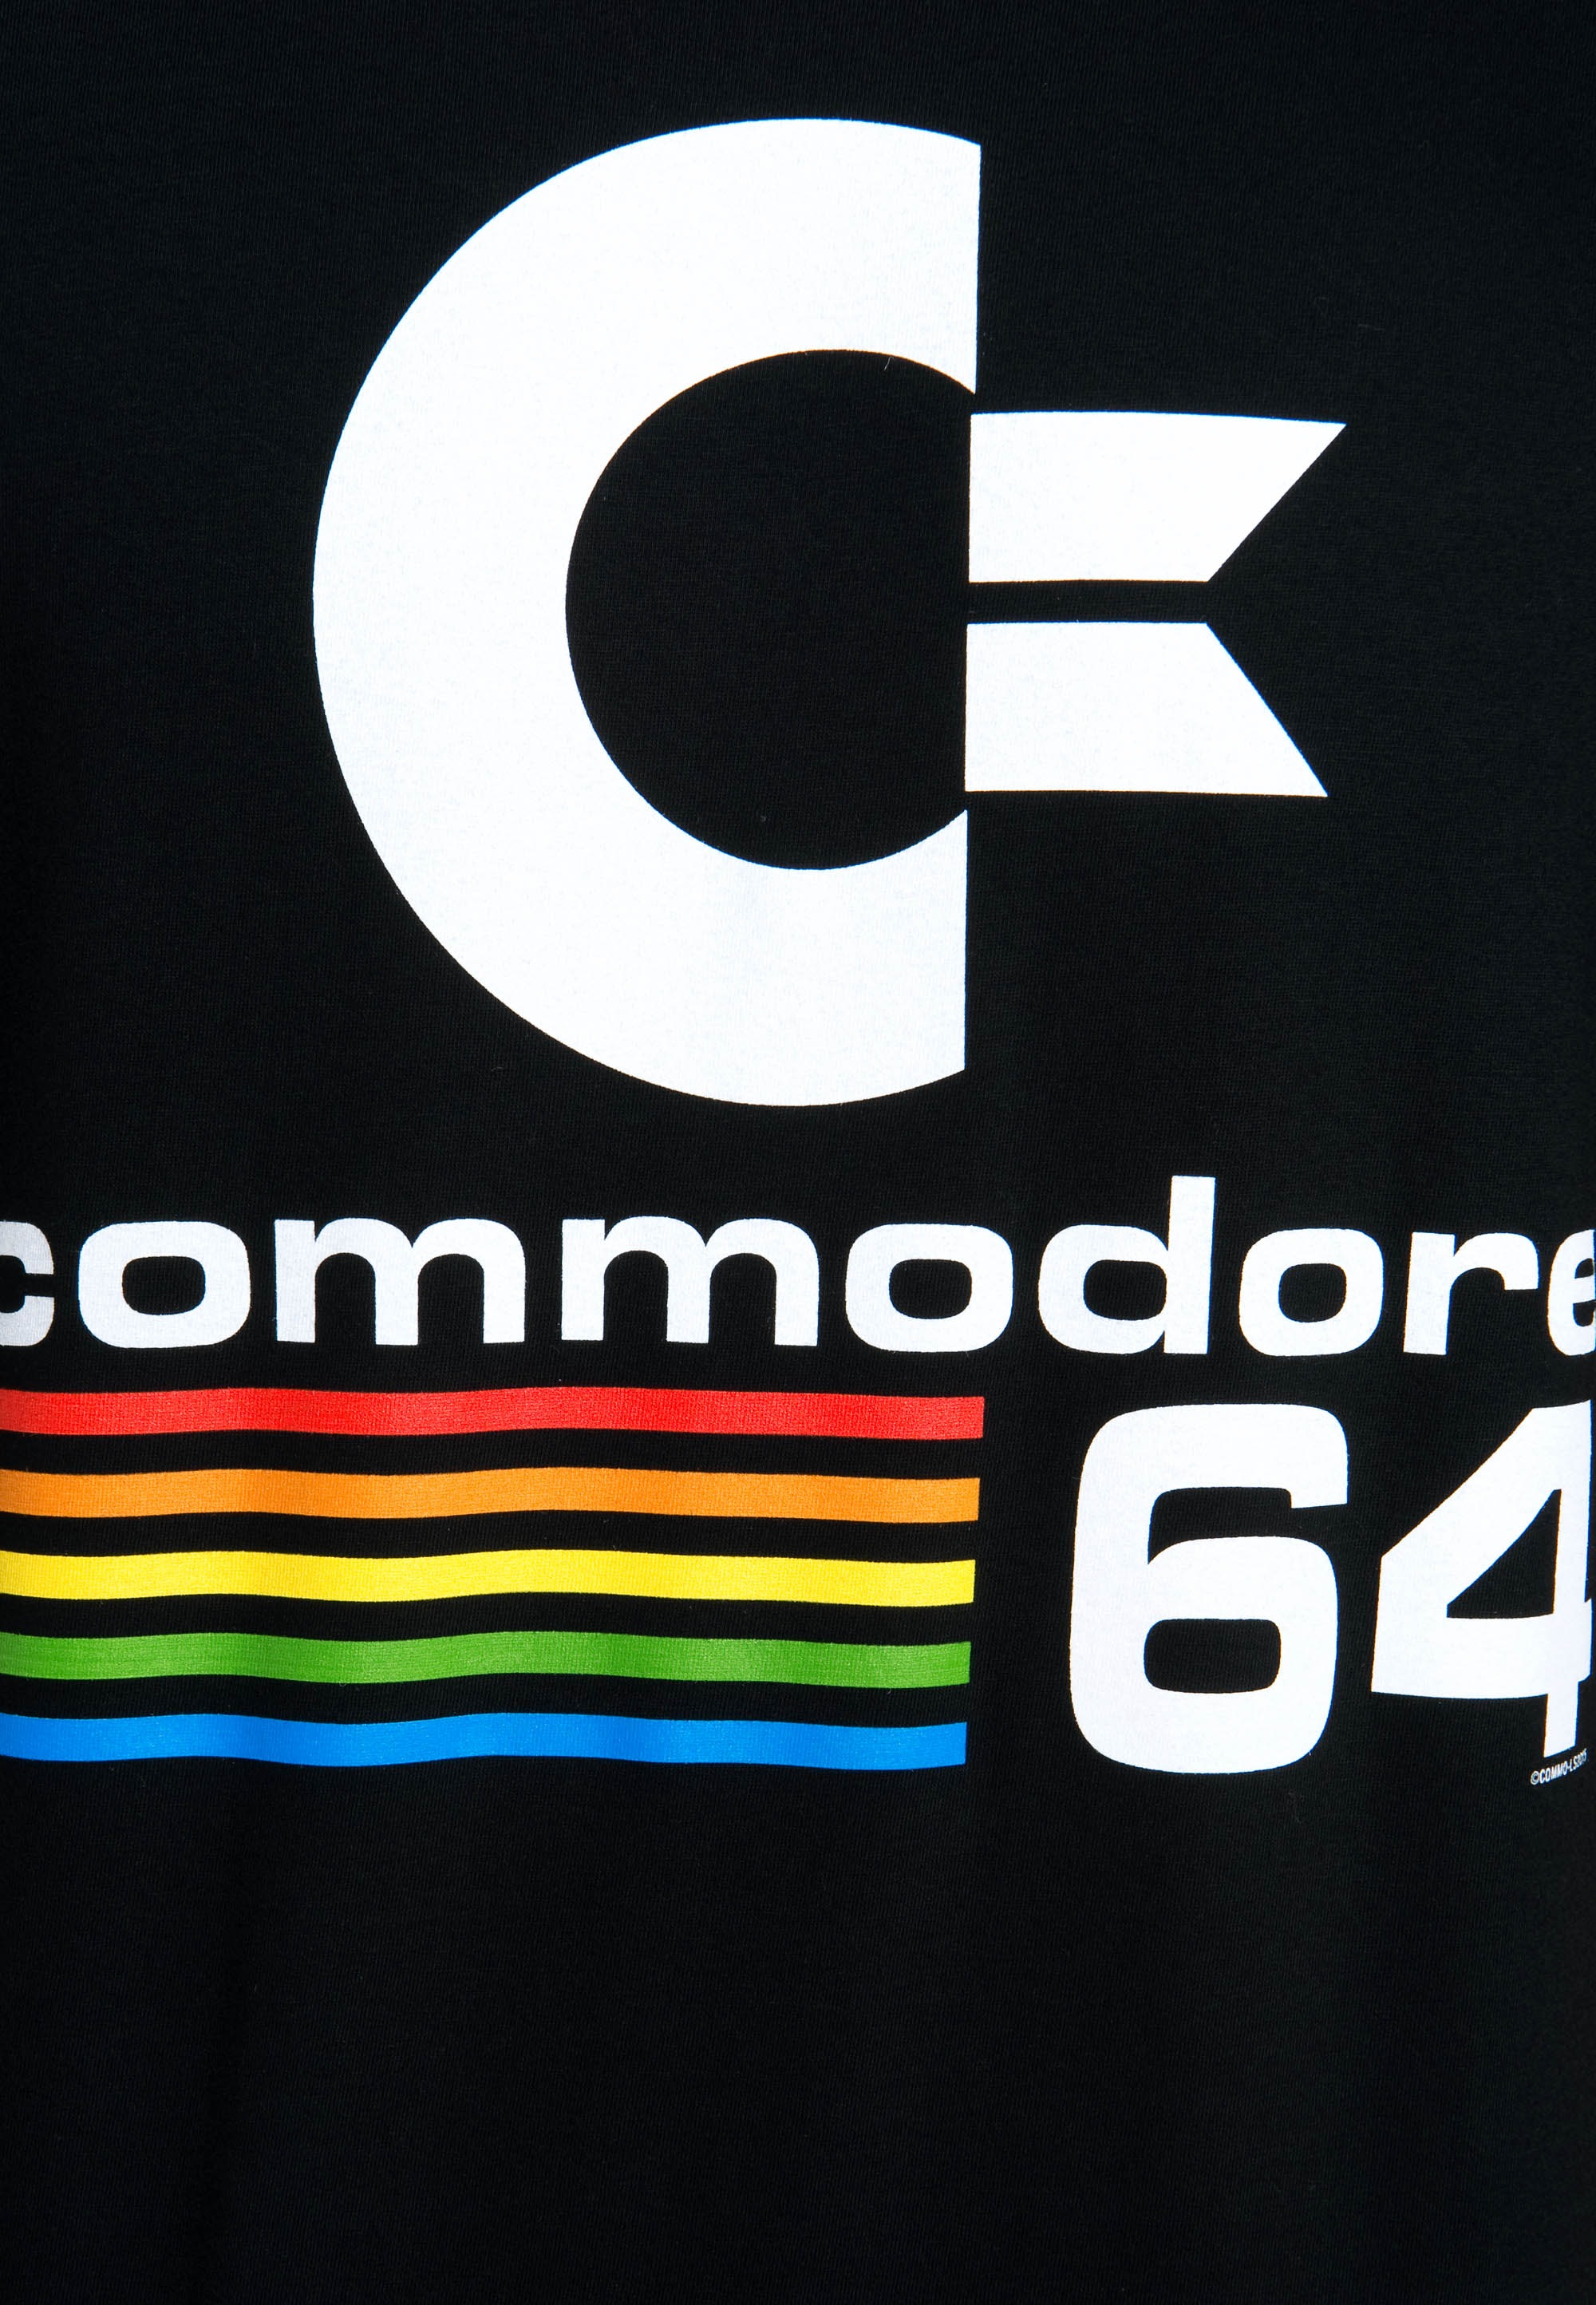 LOGOSHIRT T-Shirt »Commodore C64 Logo«, mit C64-Print